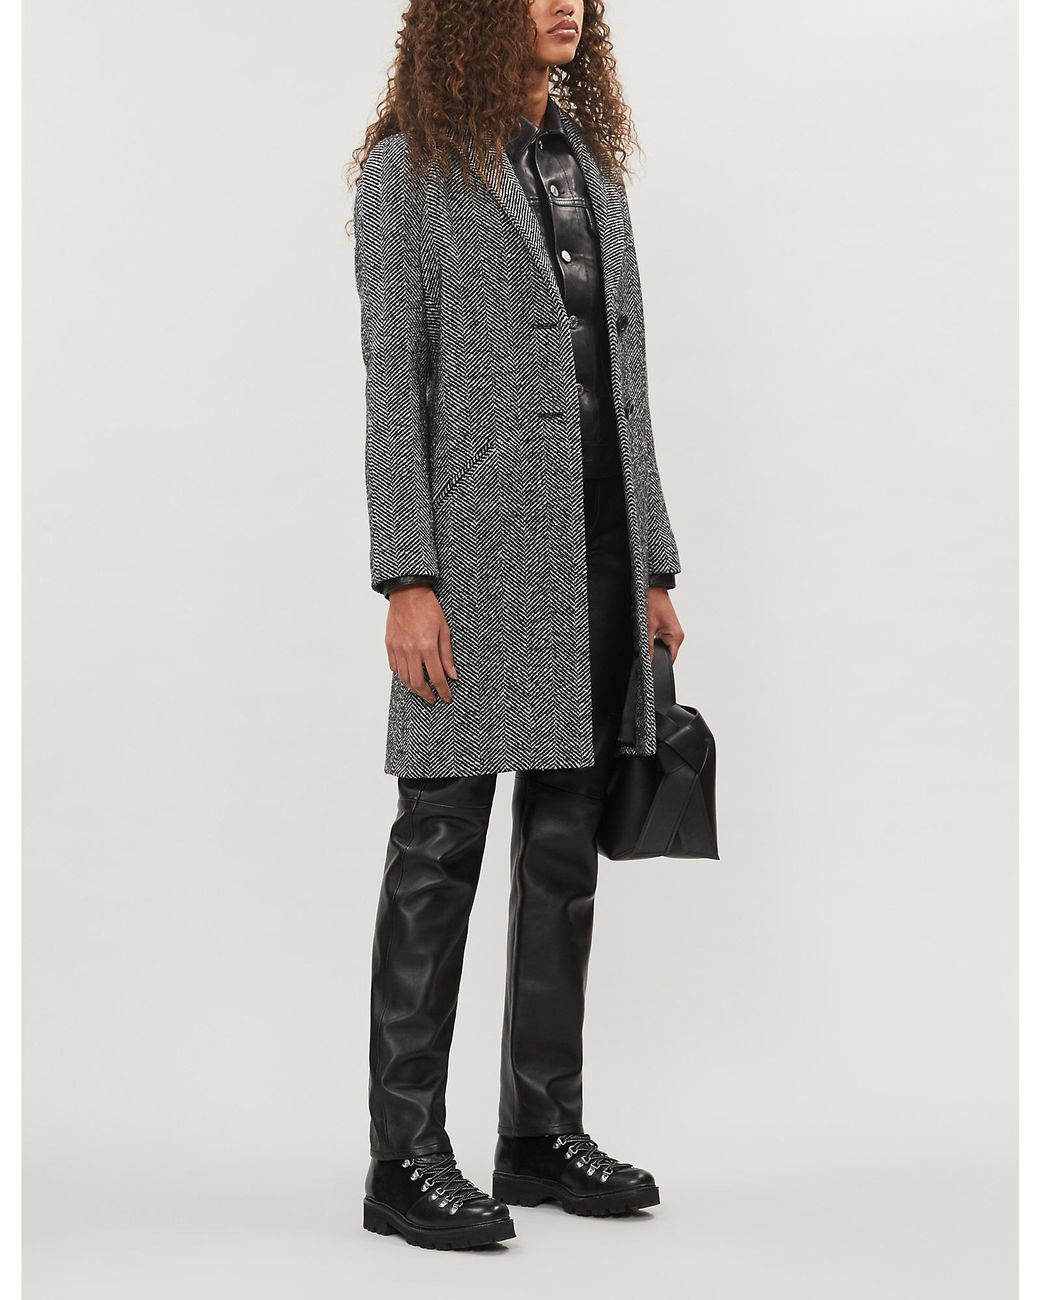 Maje Gedeon Herringbone Woven Coat in Grey | Lyst UK